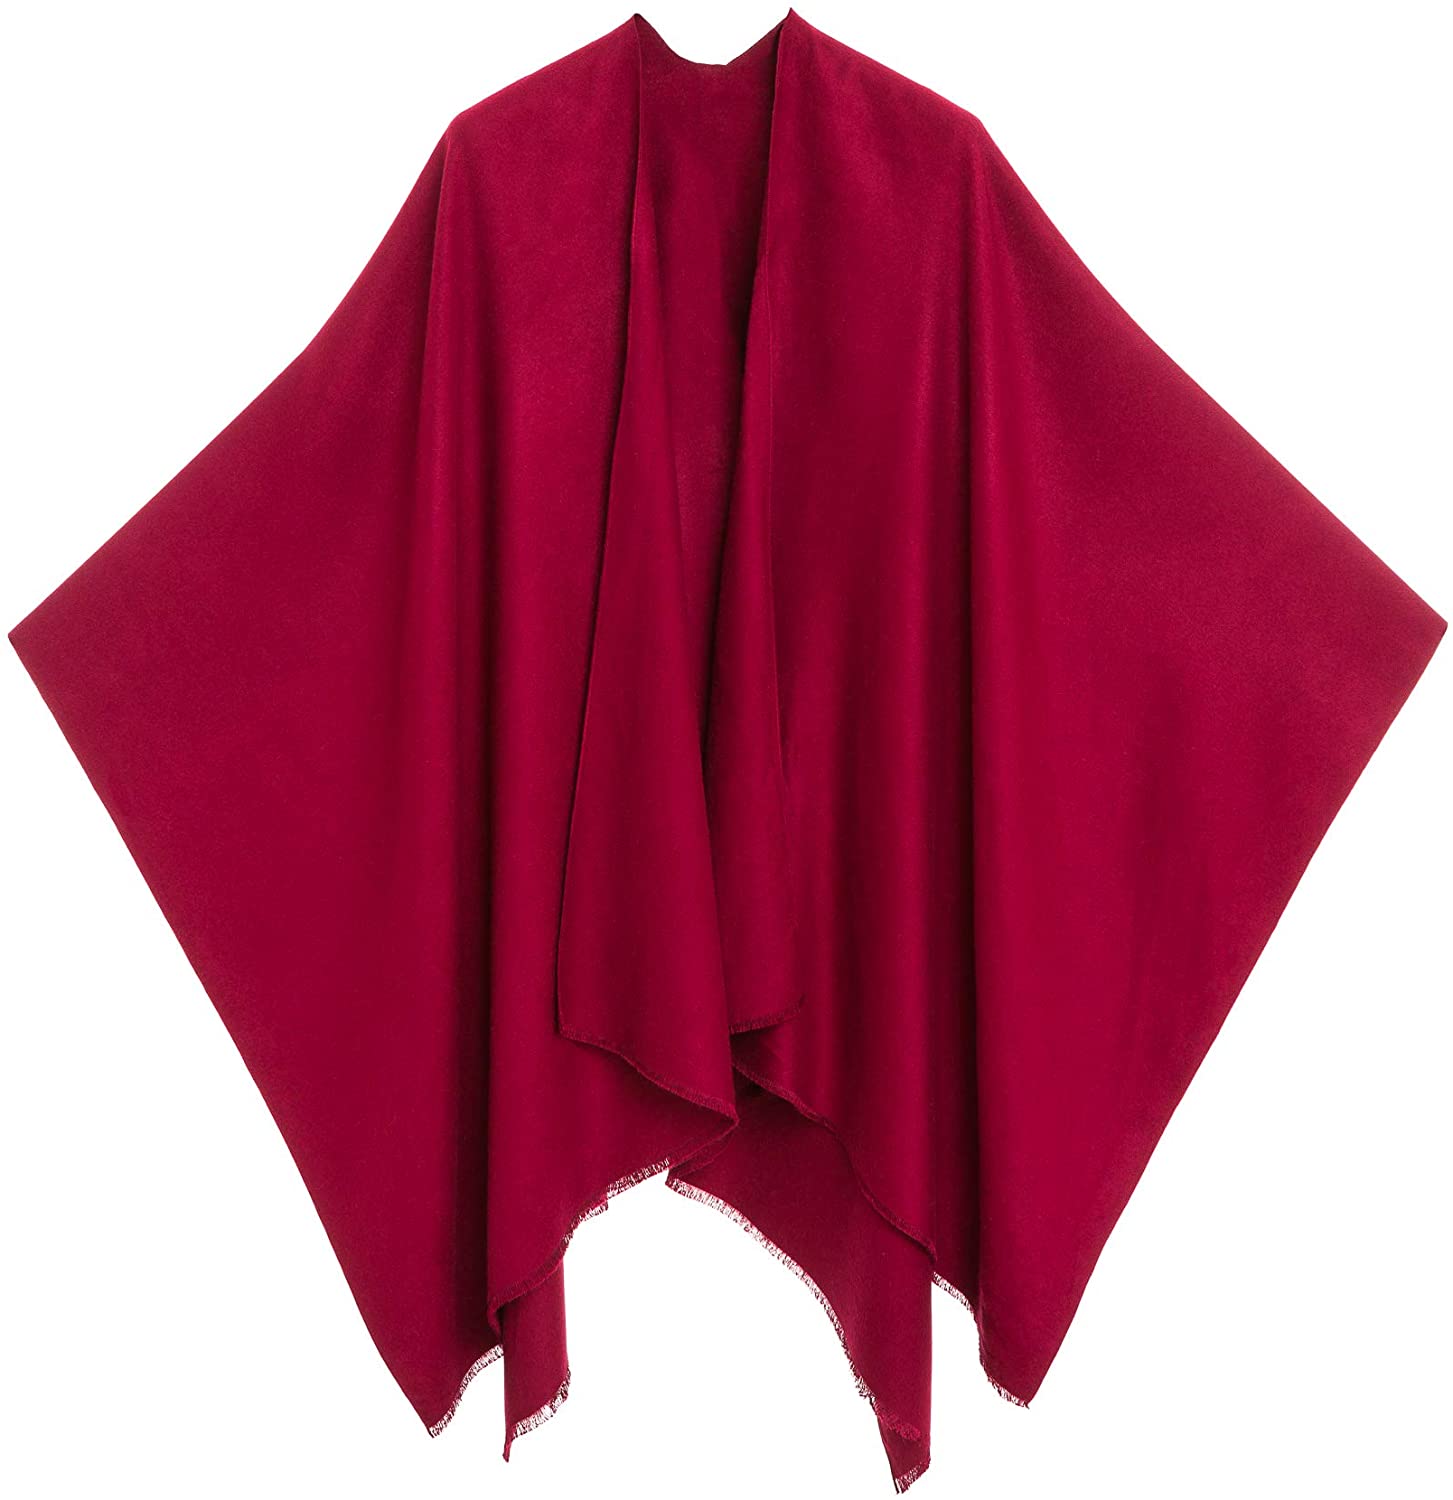 Women's Shawl Wrap Poncho Ruana Cape Cardigan Sweater Open Front for Spring  Fall | eBay